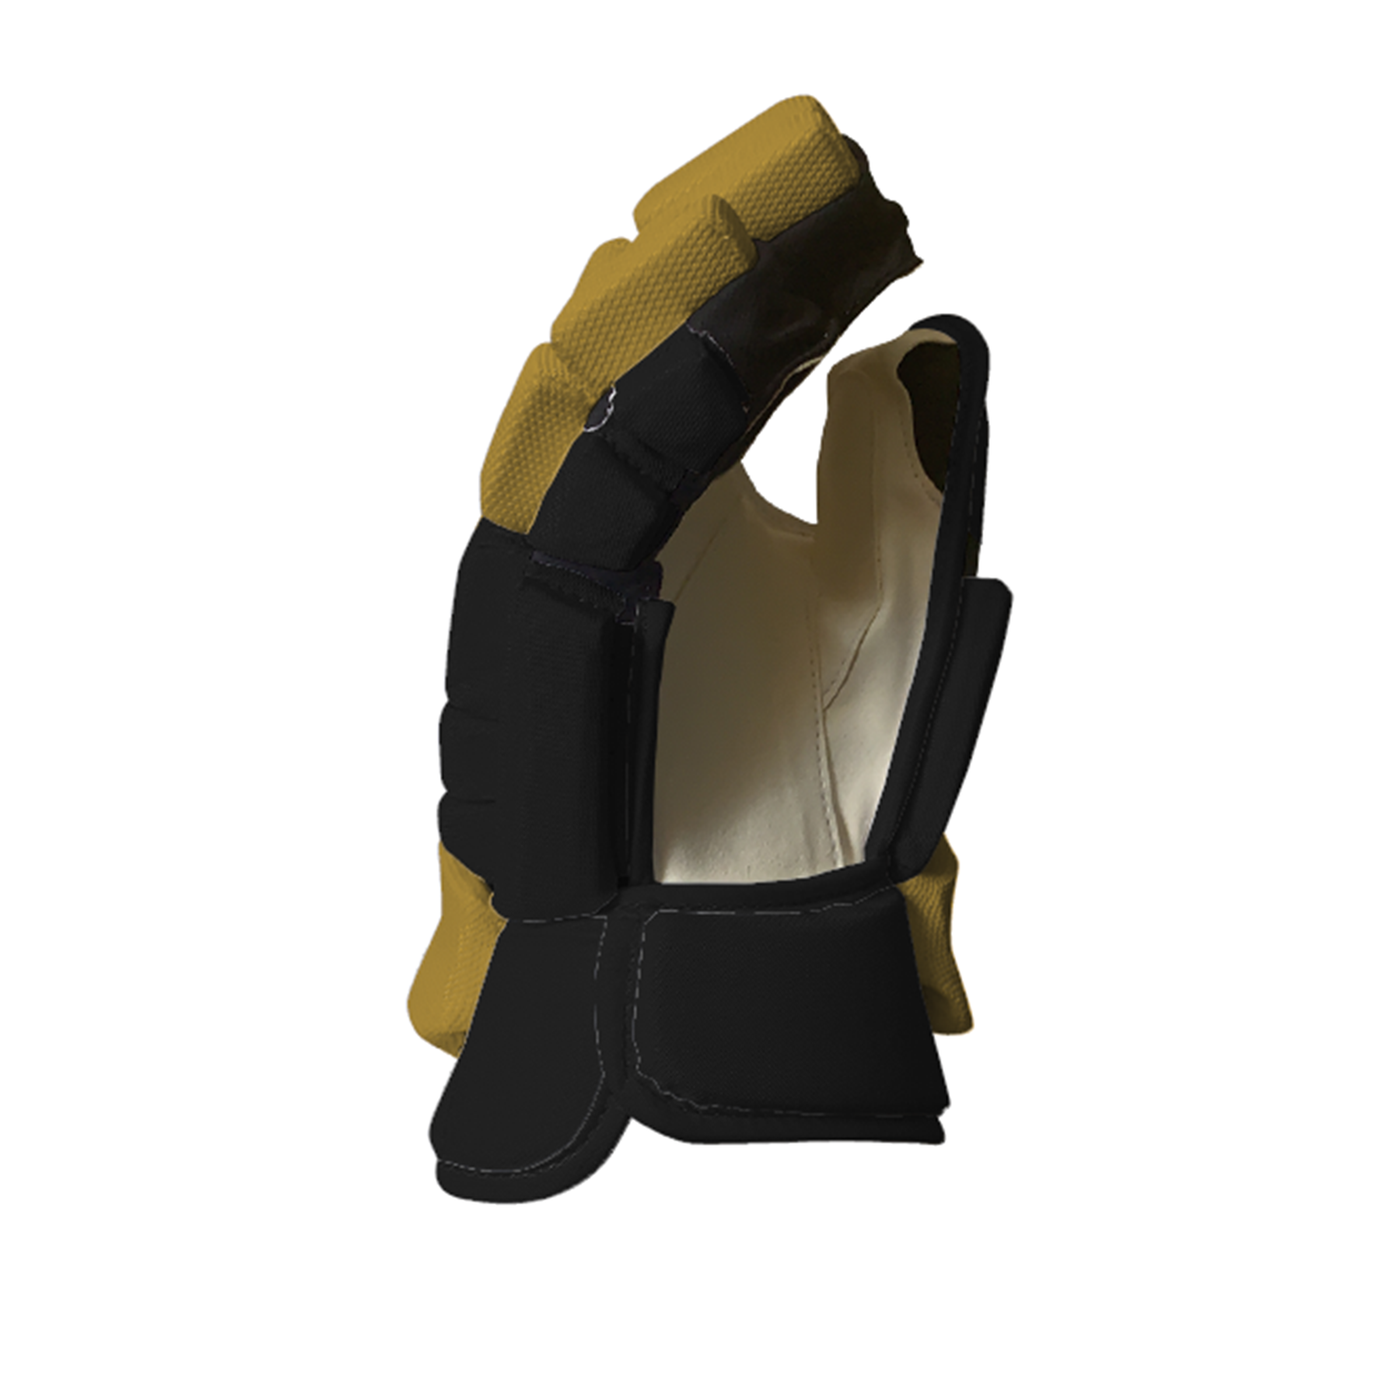 Knights Customs Warrior Alpha Pro Glove